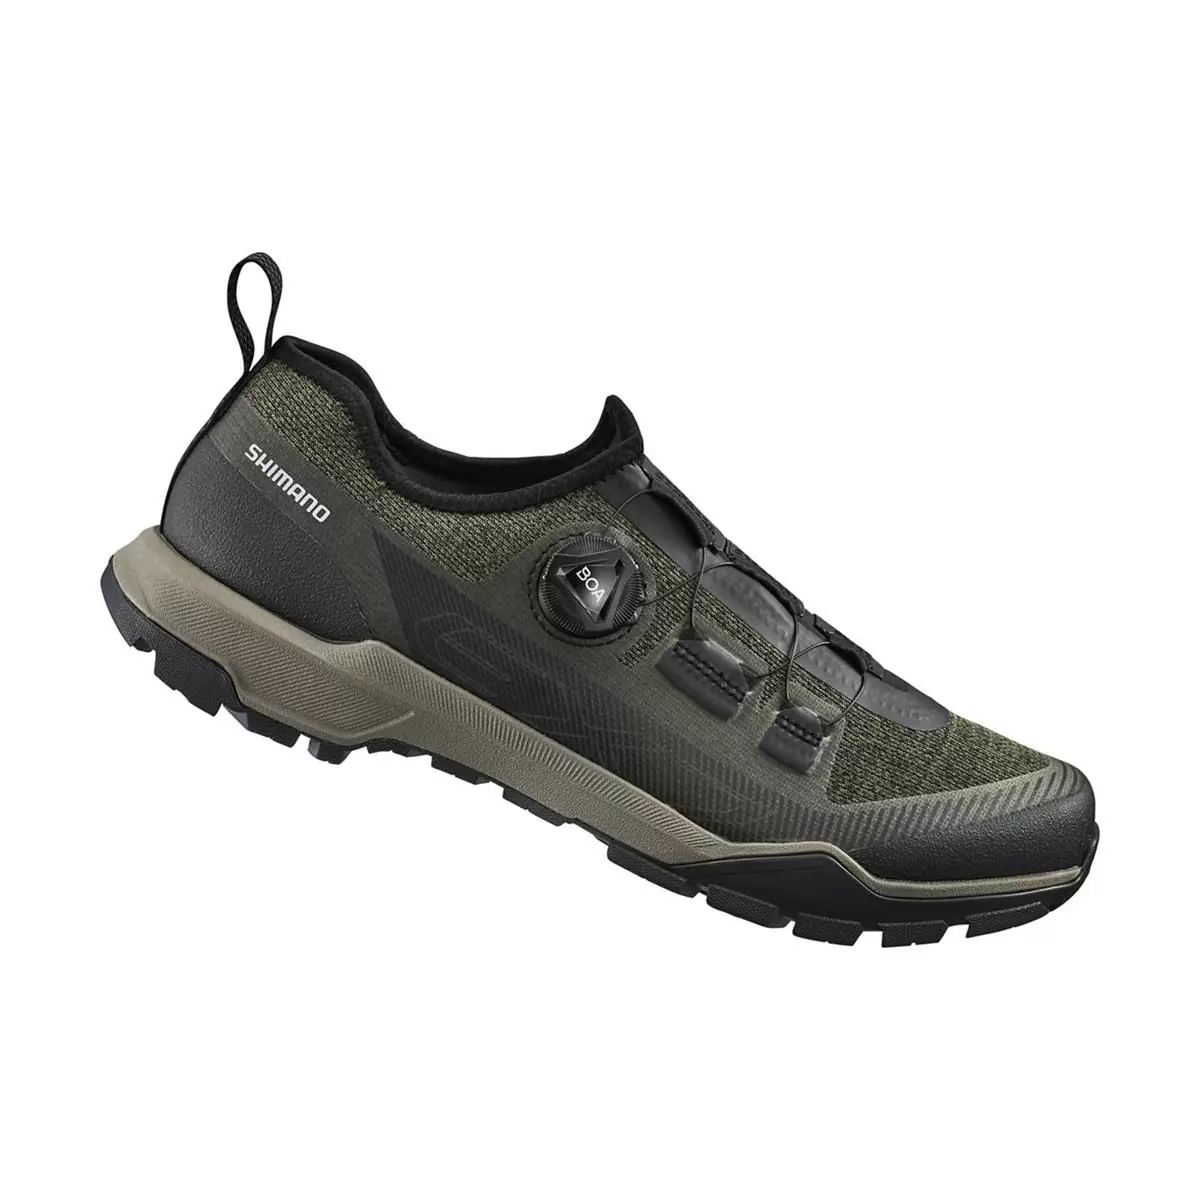 Trekking / MTB Shoes SH-EX700 Green Size 47 - image